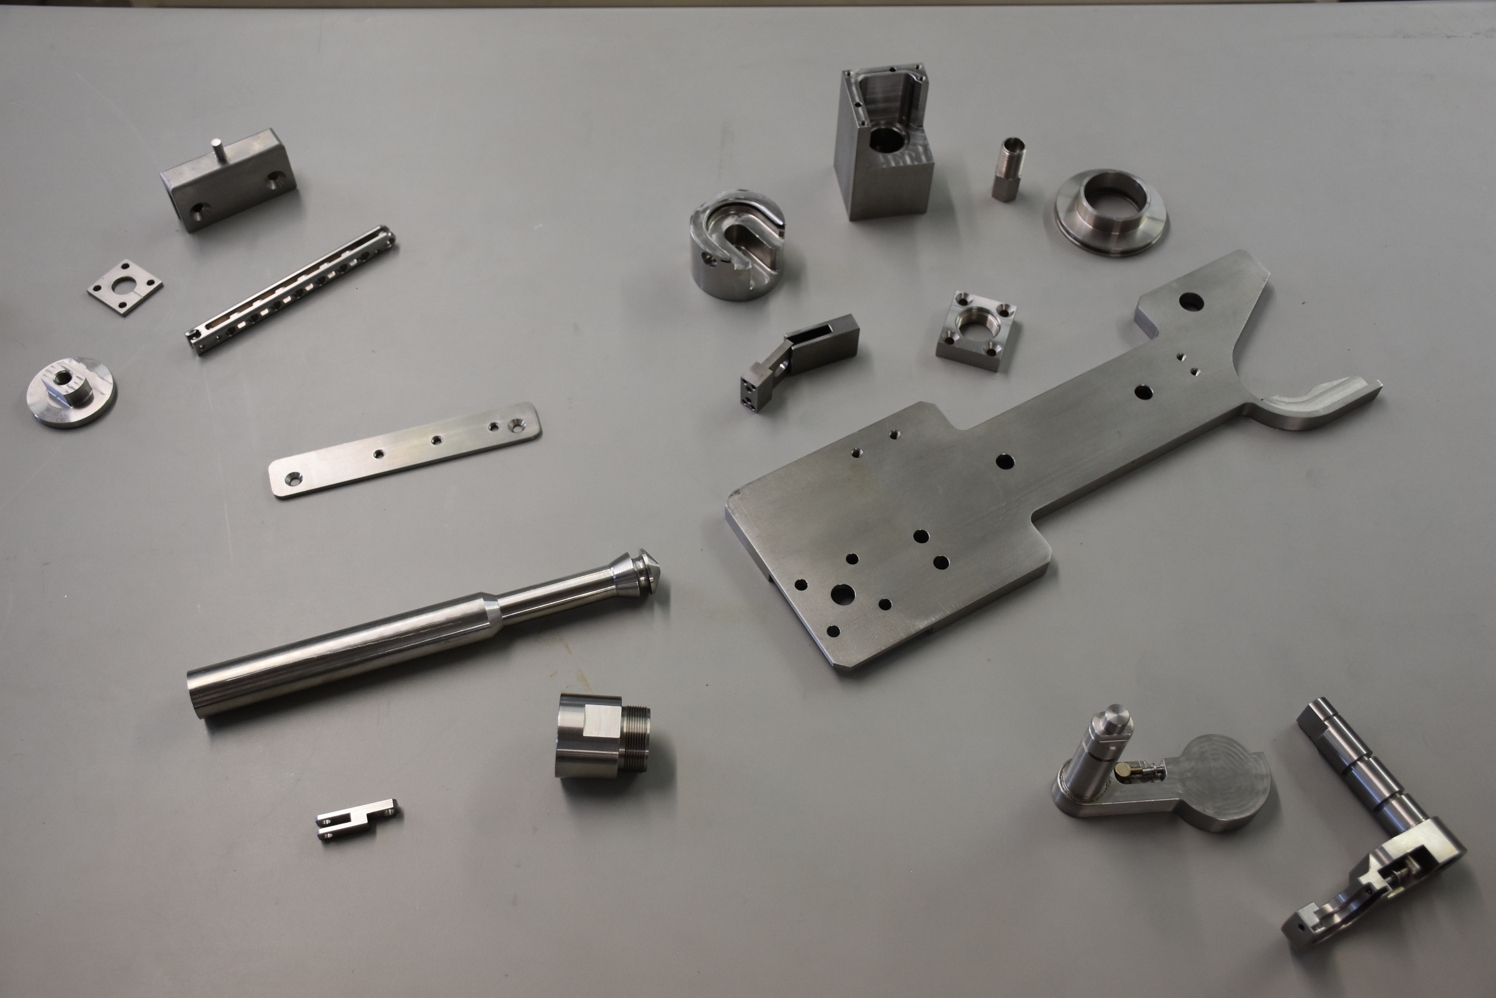 Bay Area Metal Fabrication Machine Shop Manufacturing Fremont CA, AJ Solution Machining, 510-270-8036